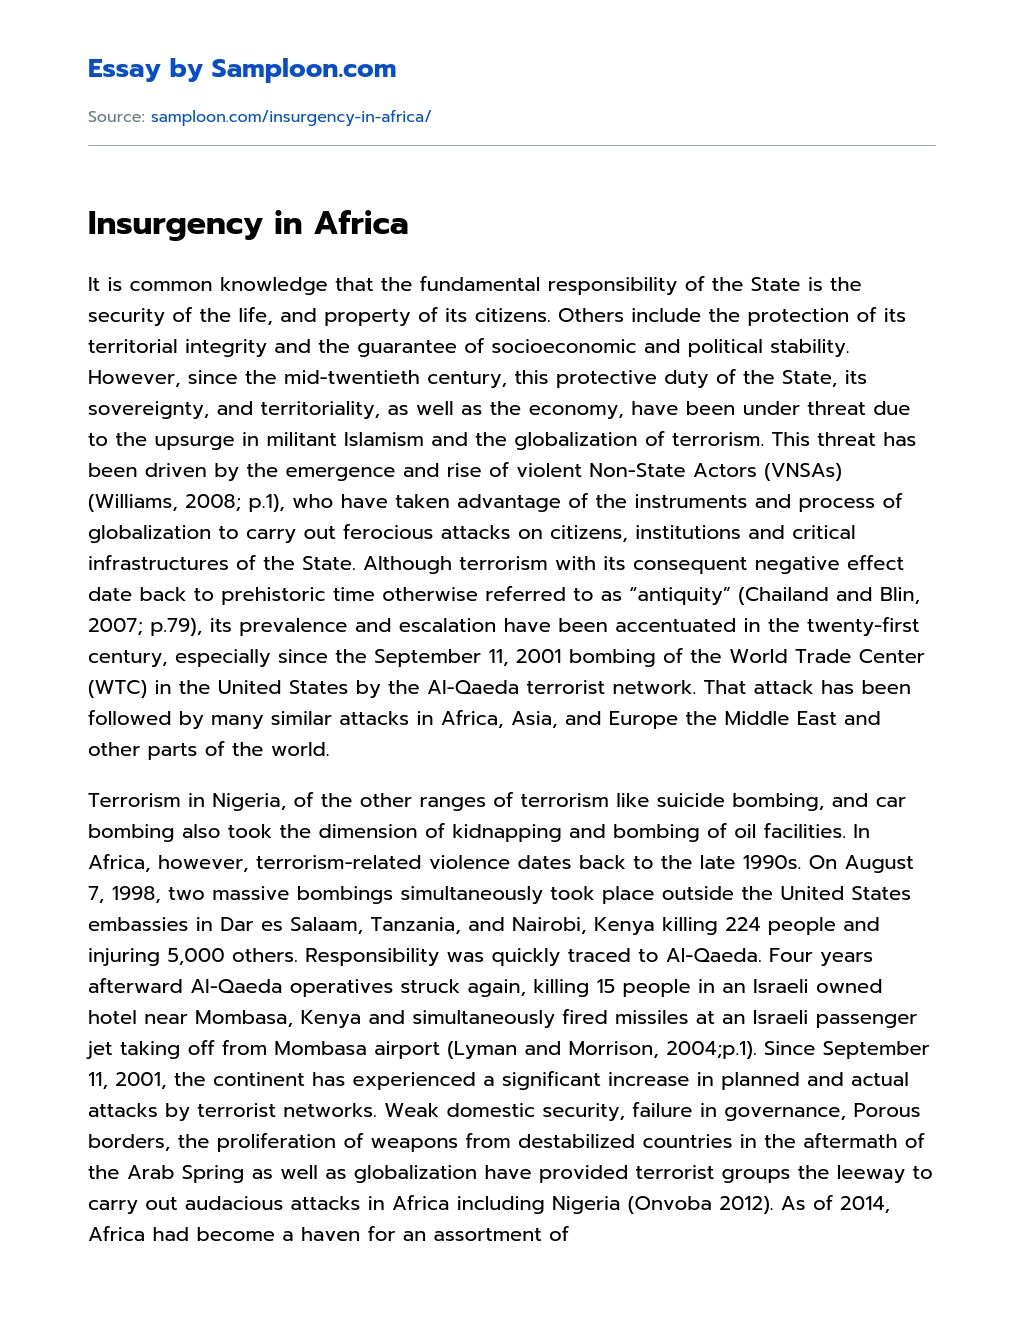 Insurgency in Africa essay